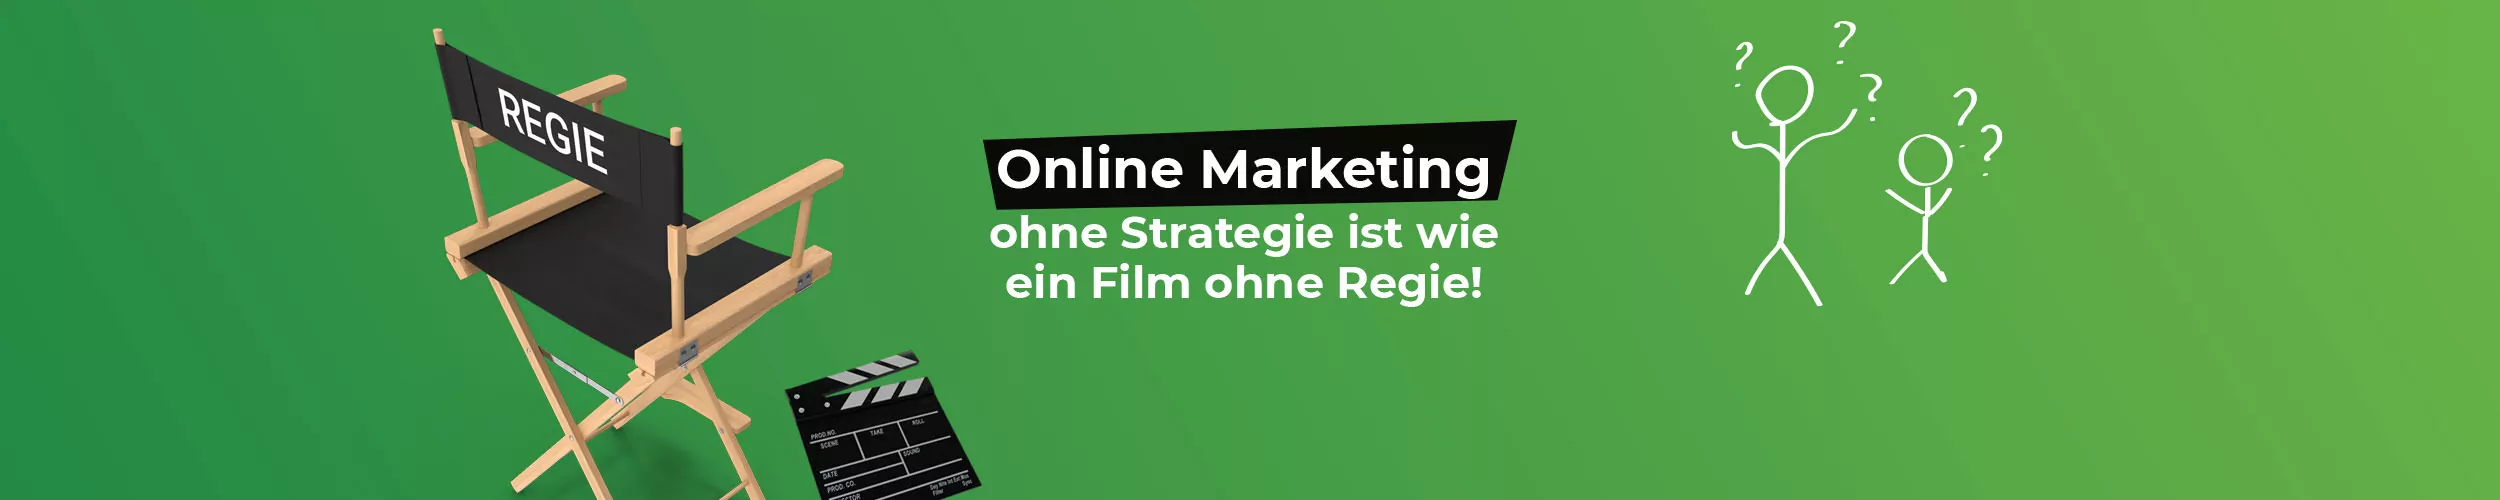 purpix - Online Marketing Rosenheim